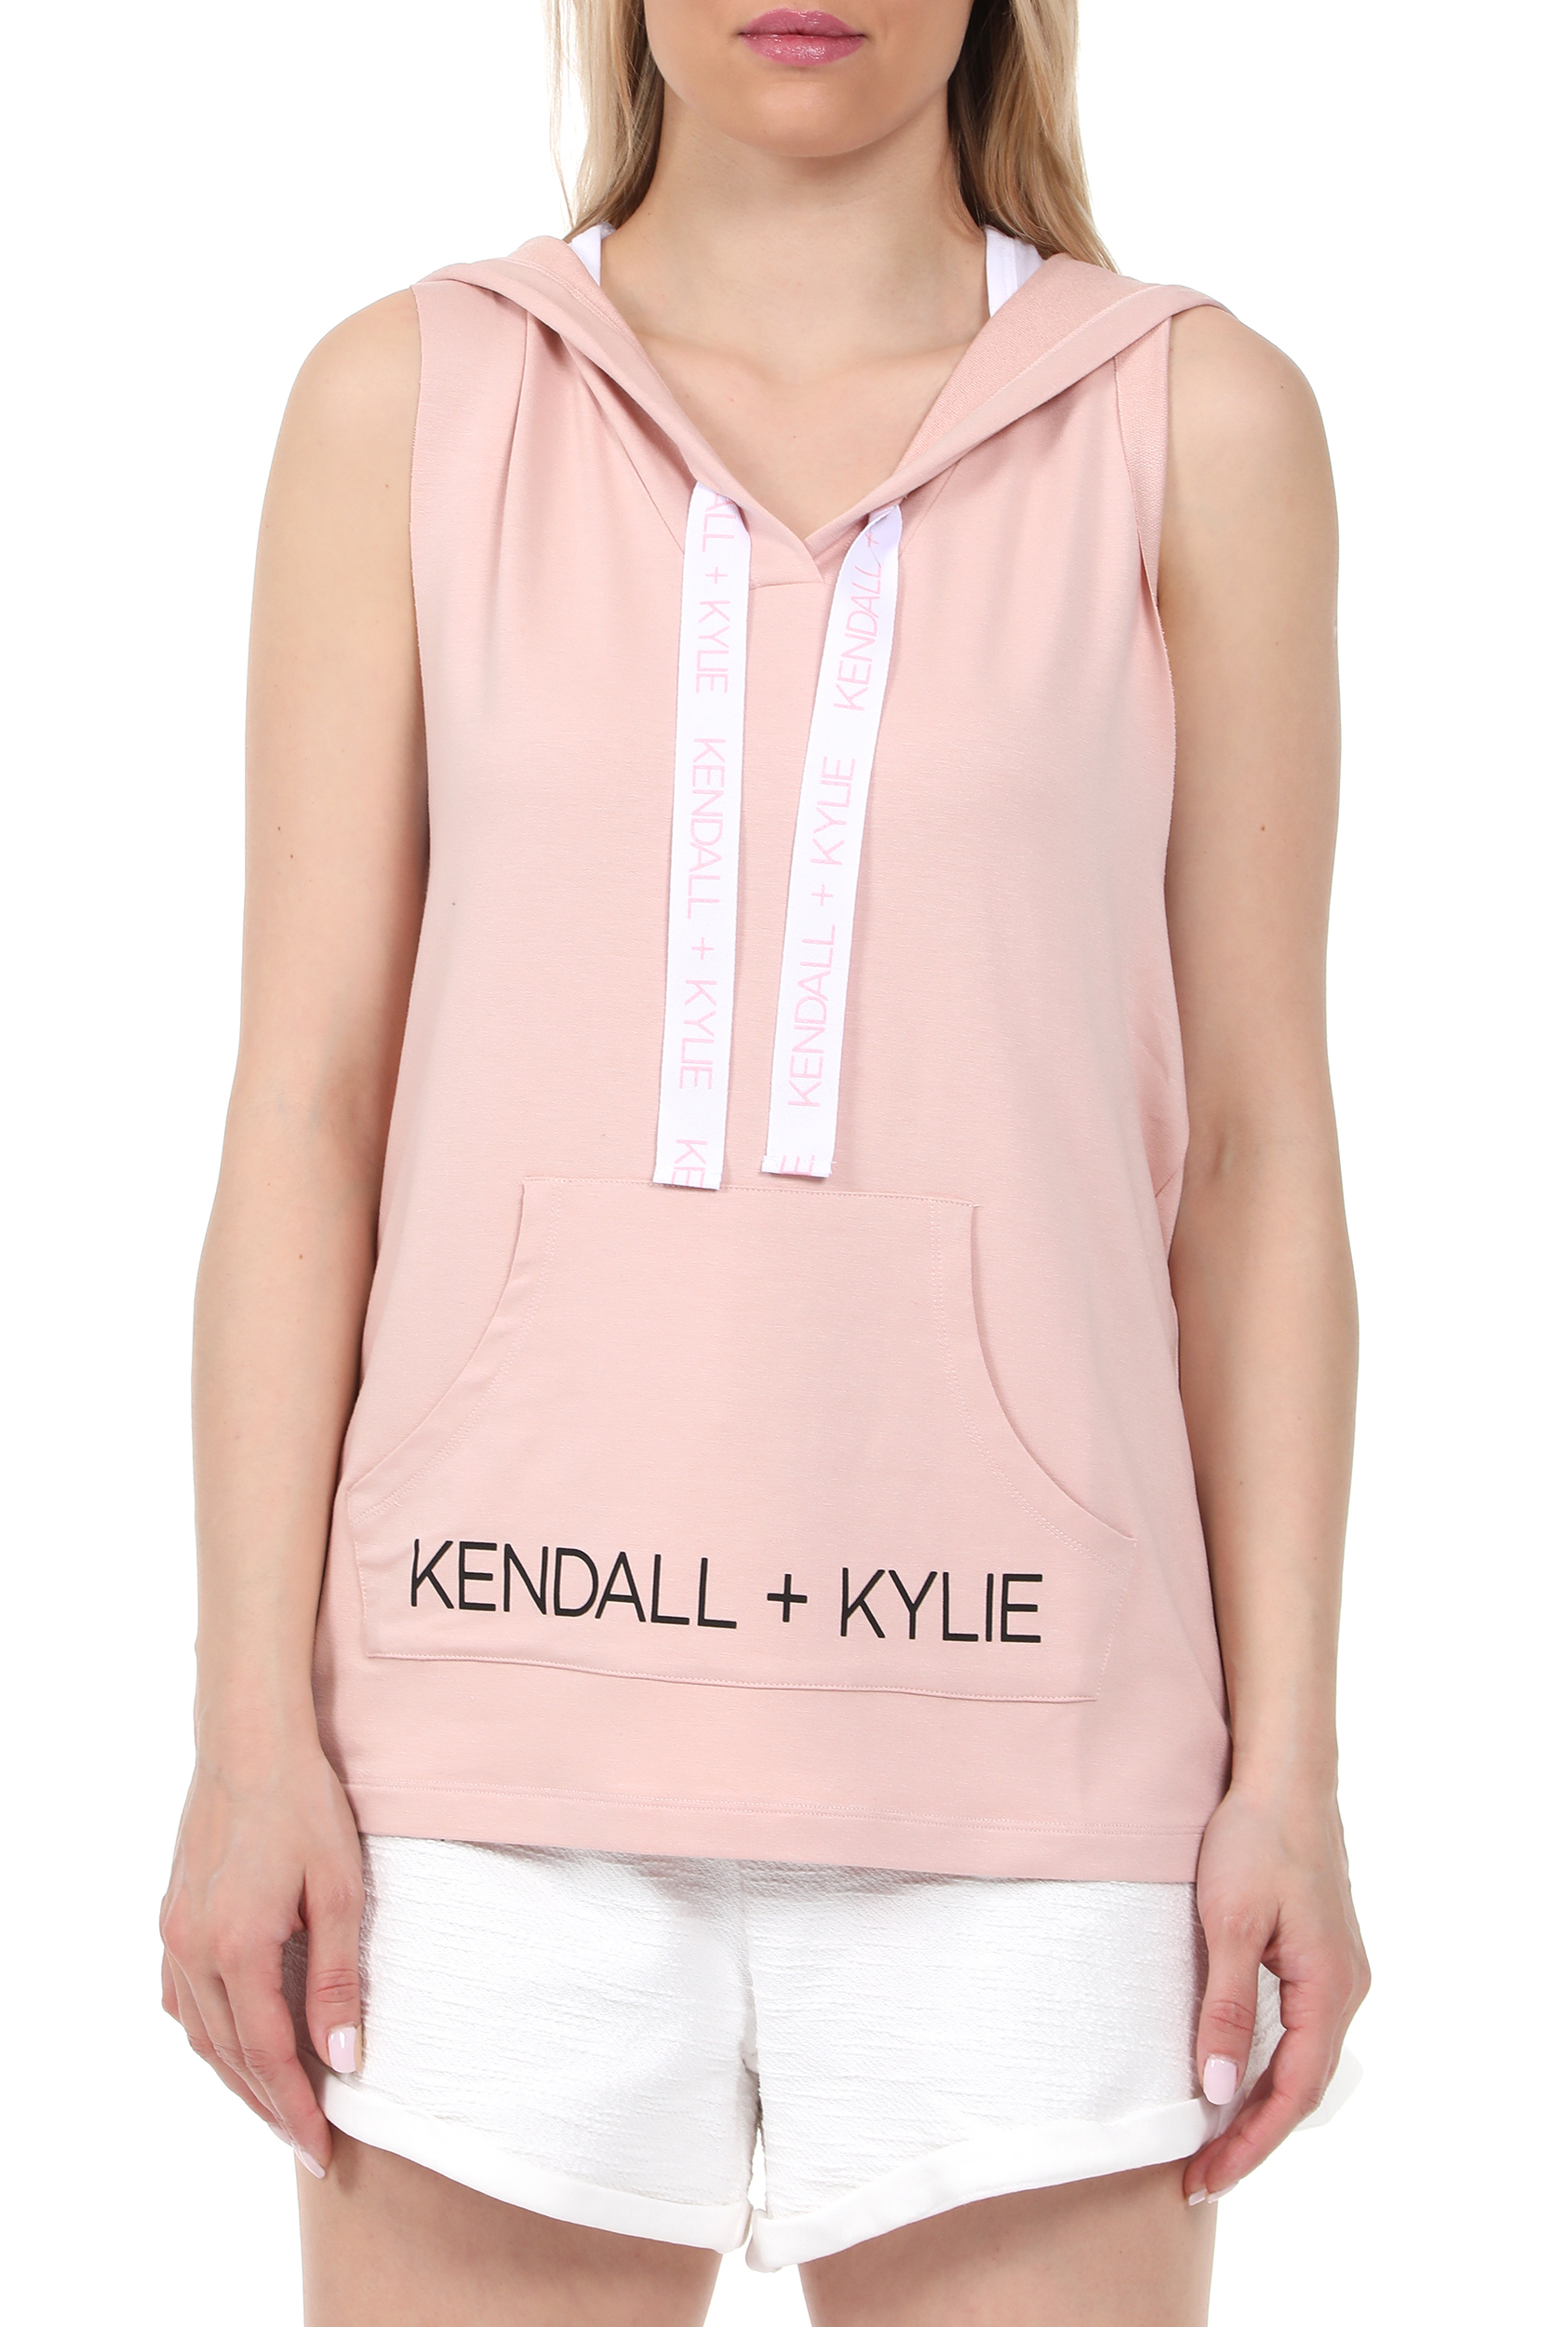 KENDALL + KYLIE – Γυναικεία φούτερ μπλούζα KENDALL + KYLIE W HOODY LOGO ροζ 1811184.0-00P3